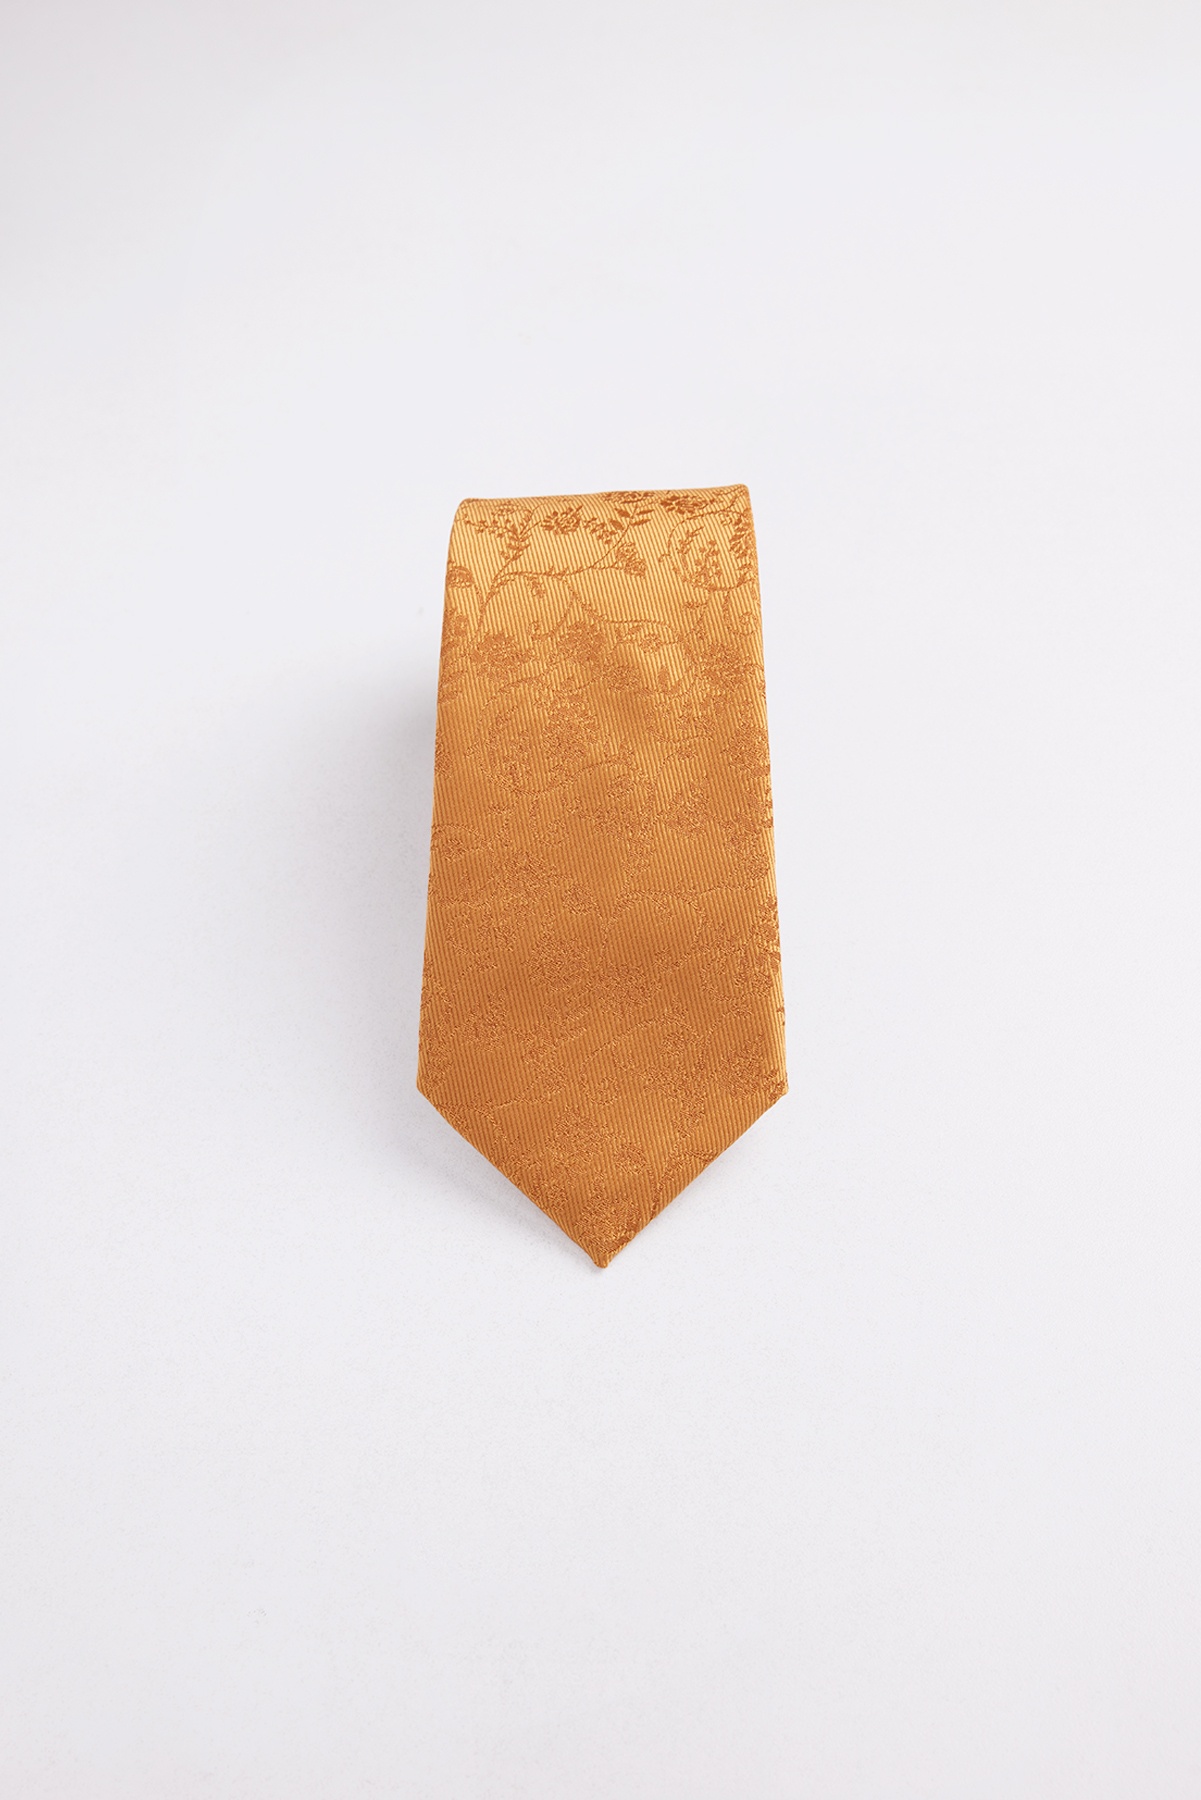  Mustard Tie